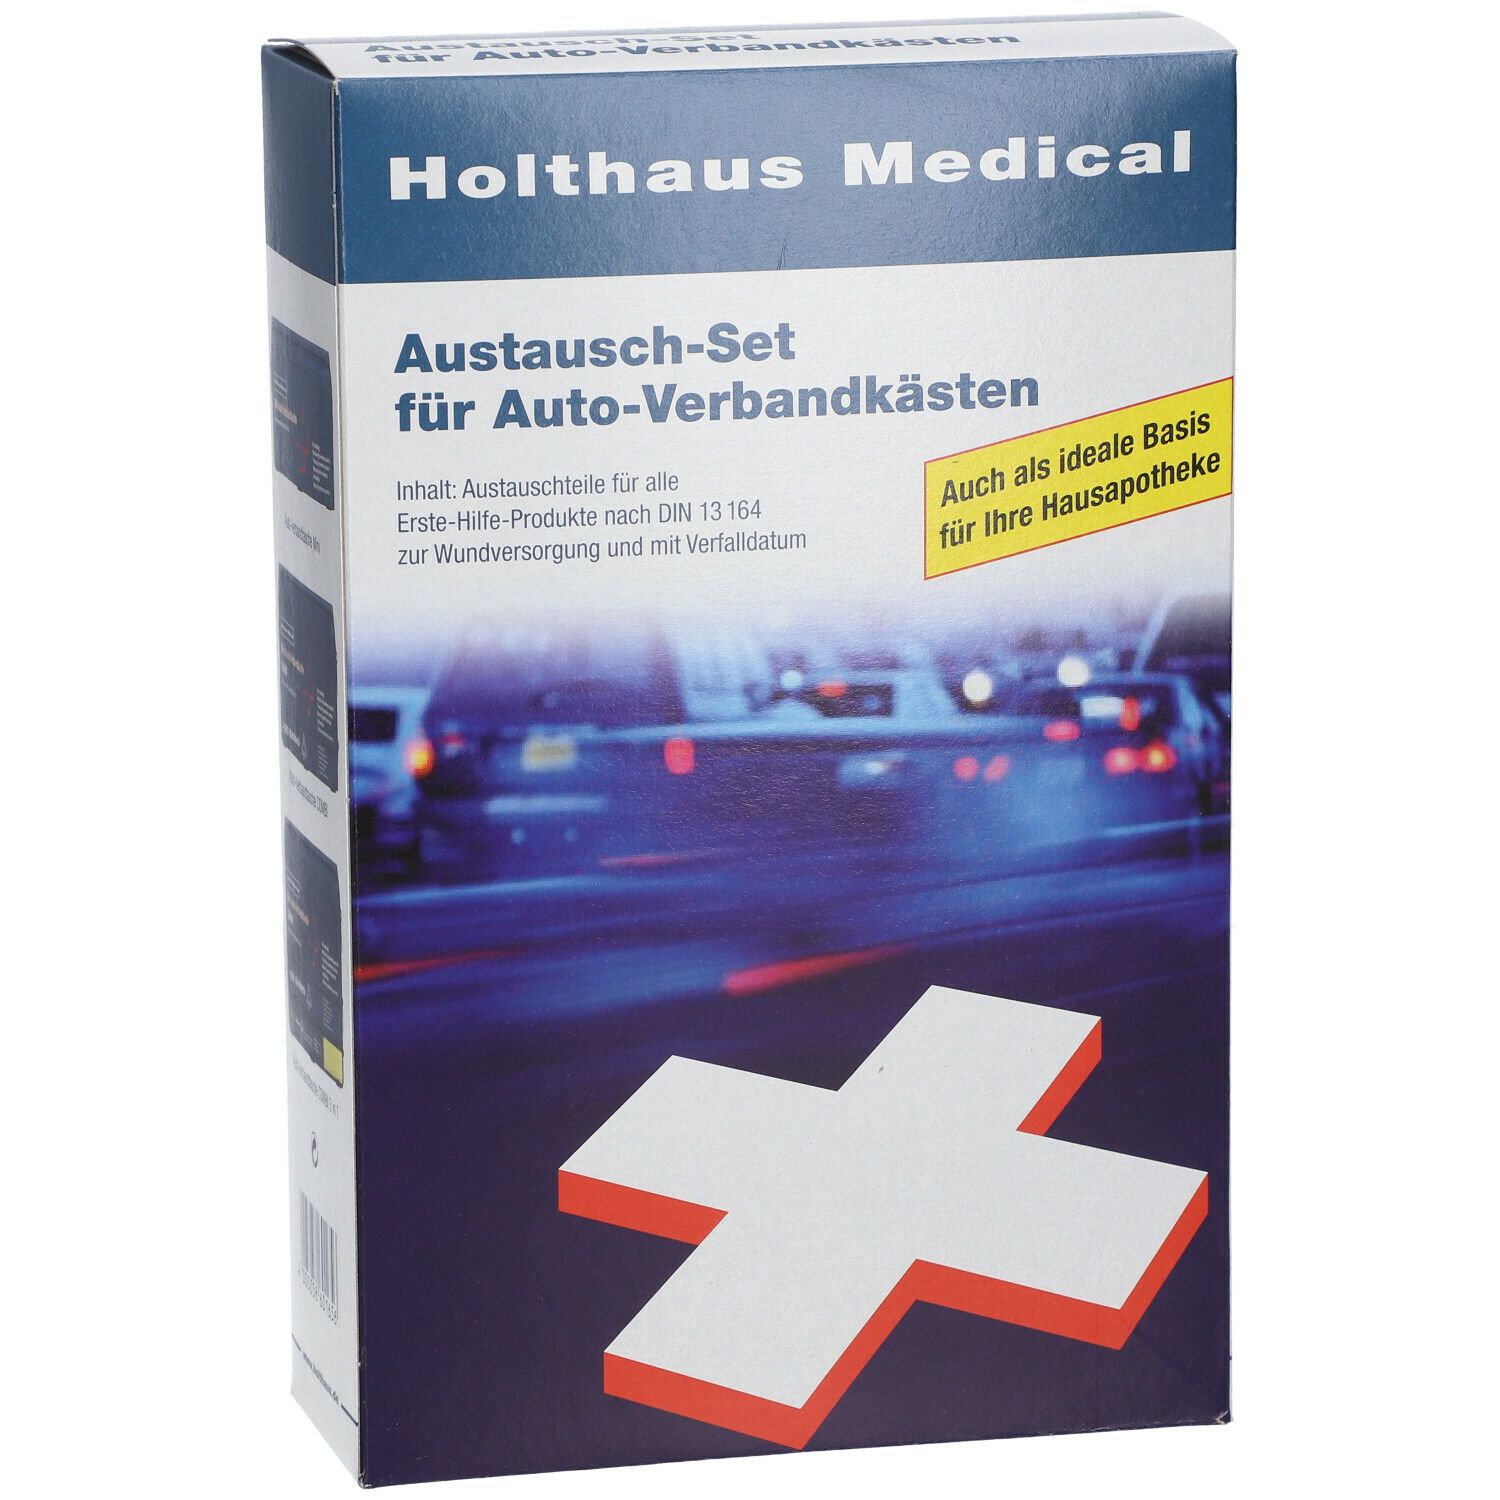 Silber KFZ-Verbandskasten Auto - Holthaus Medical